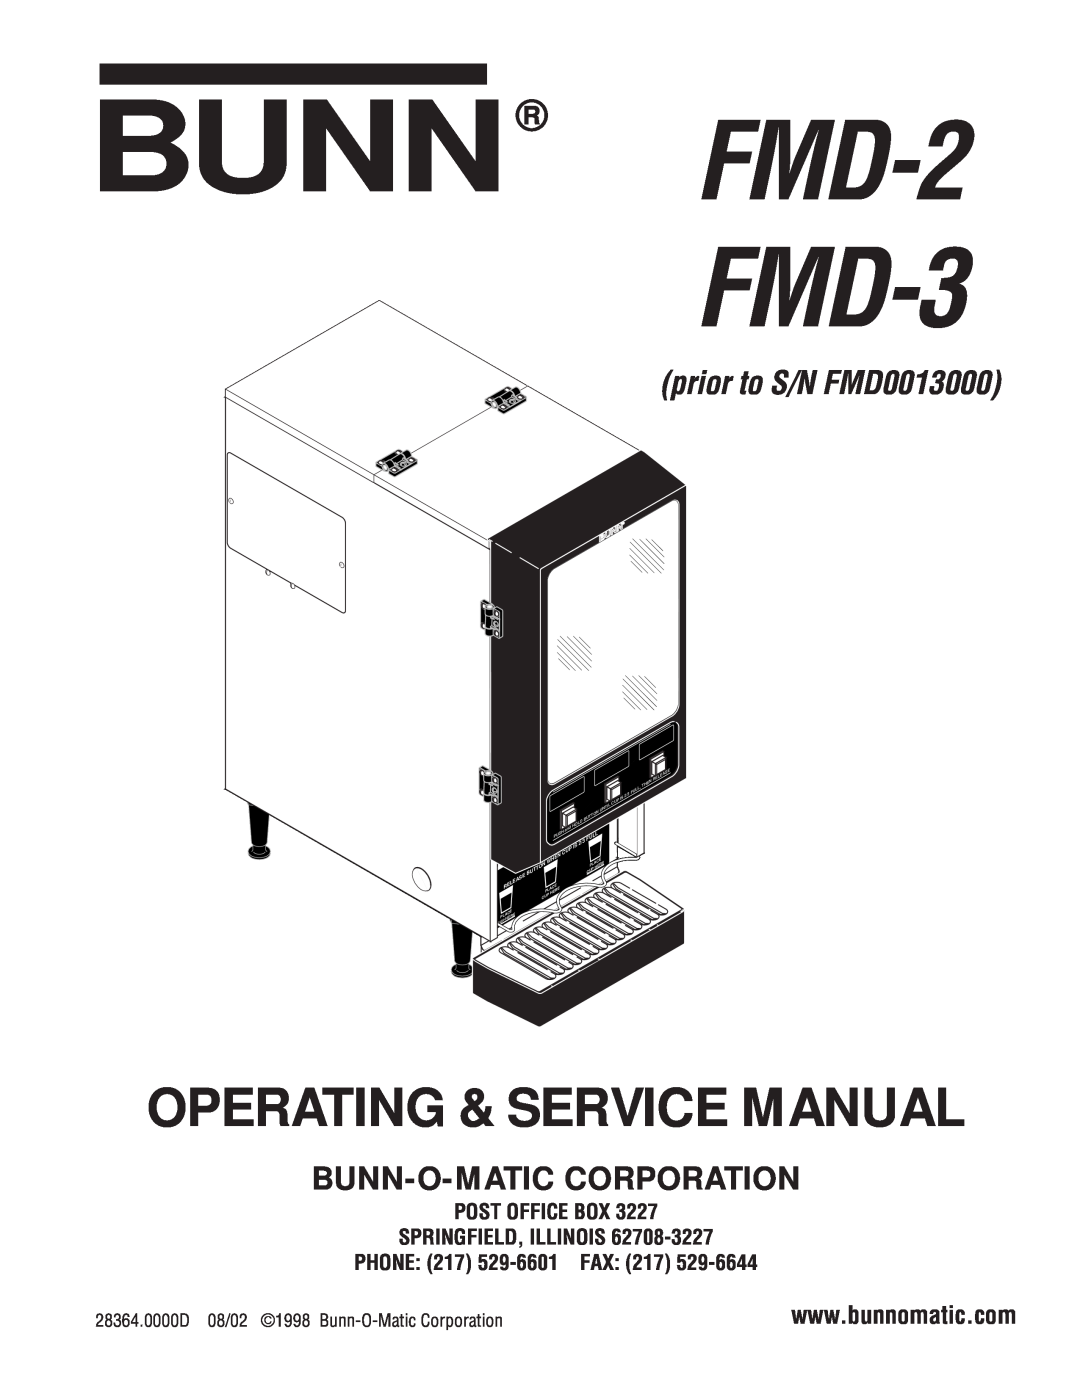 Bunn service manual Post Office Box Springfield, Illinois, PHONE 217 529-6601FAX, BUNN FMD-2 FMD-3, Release, When 